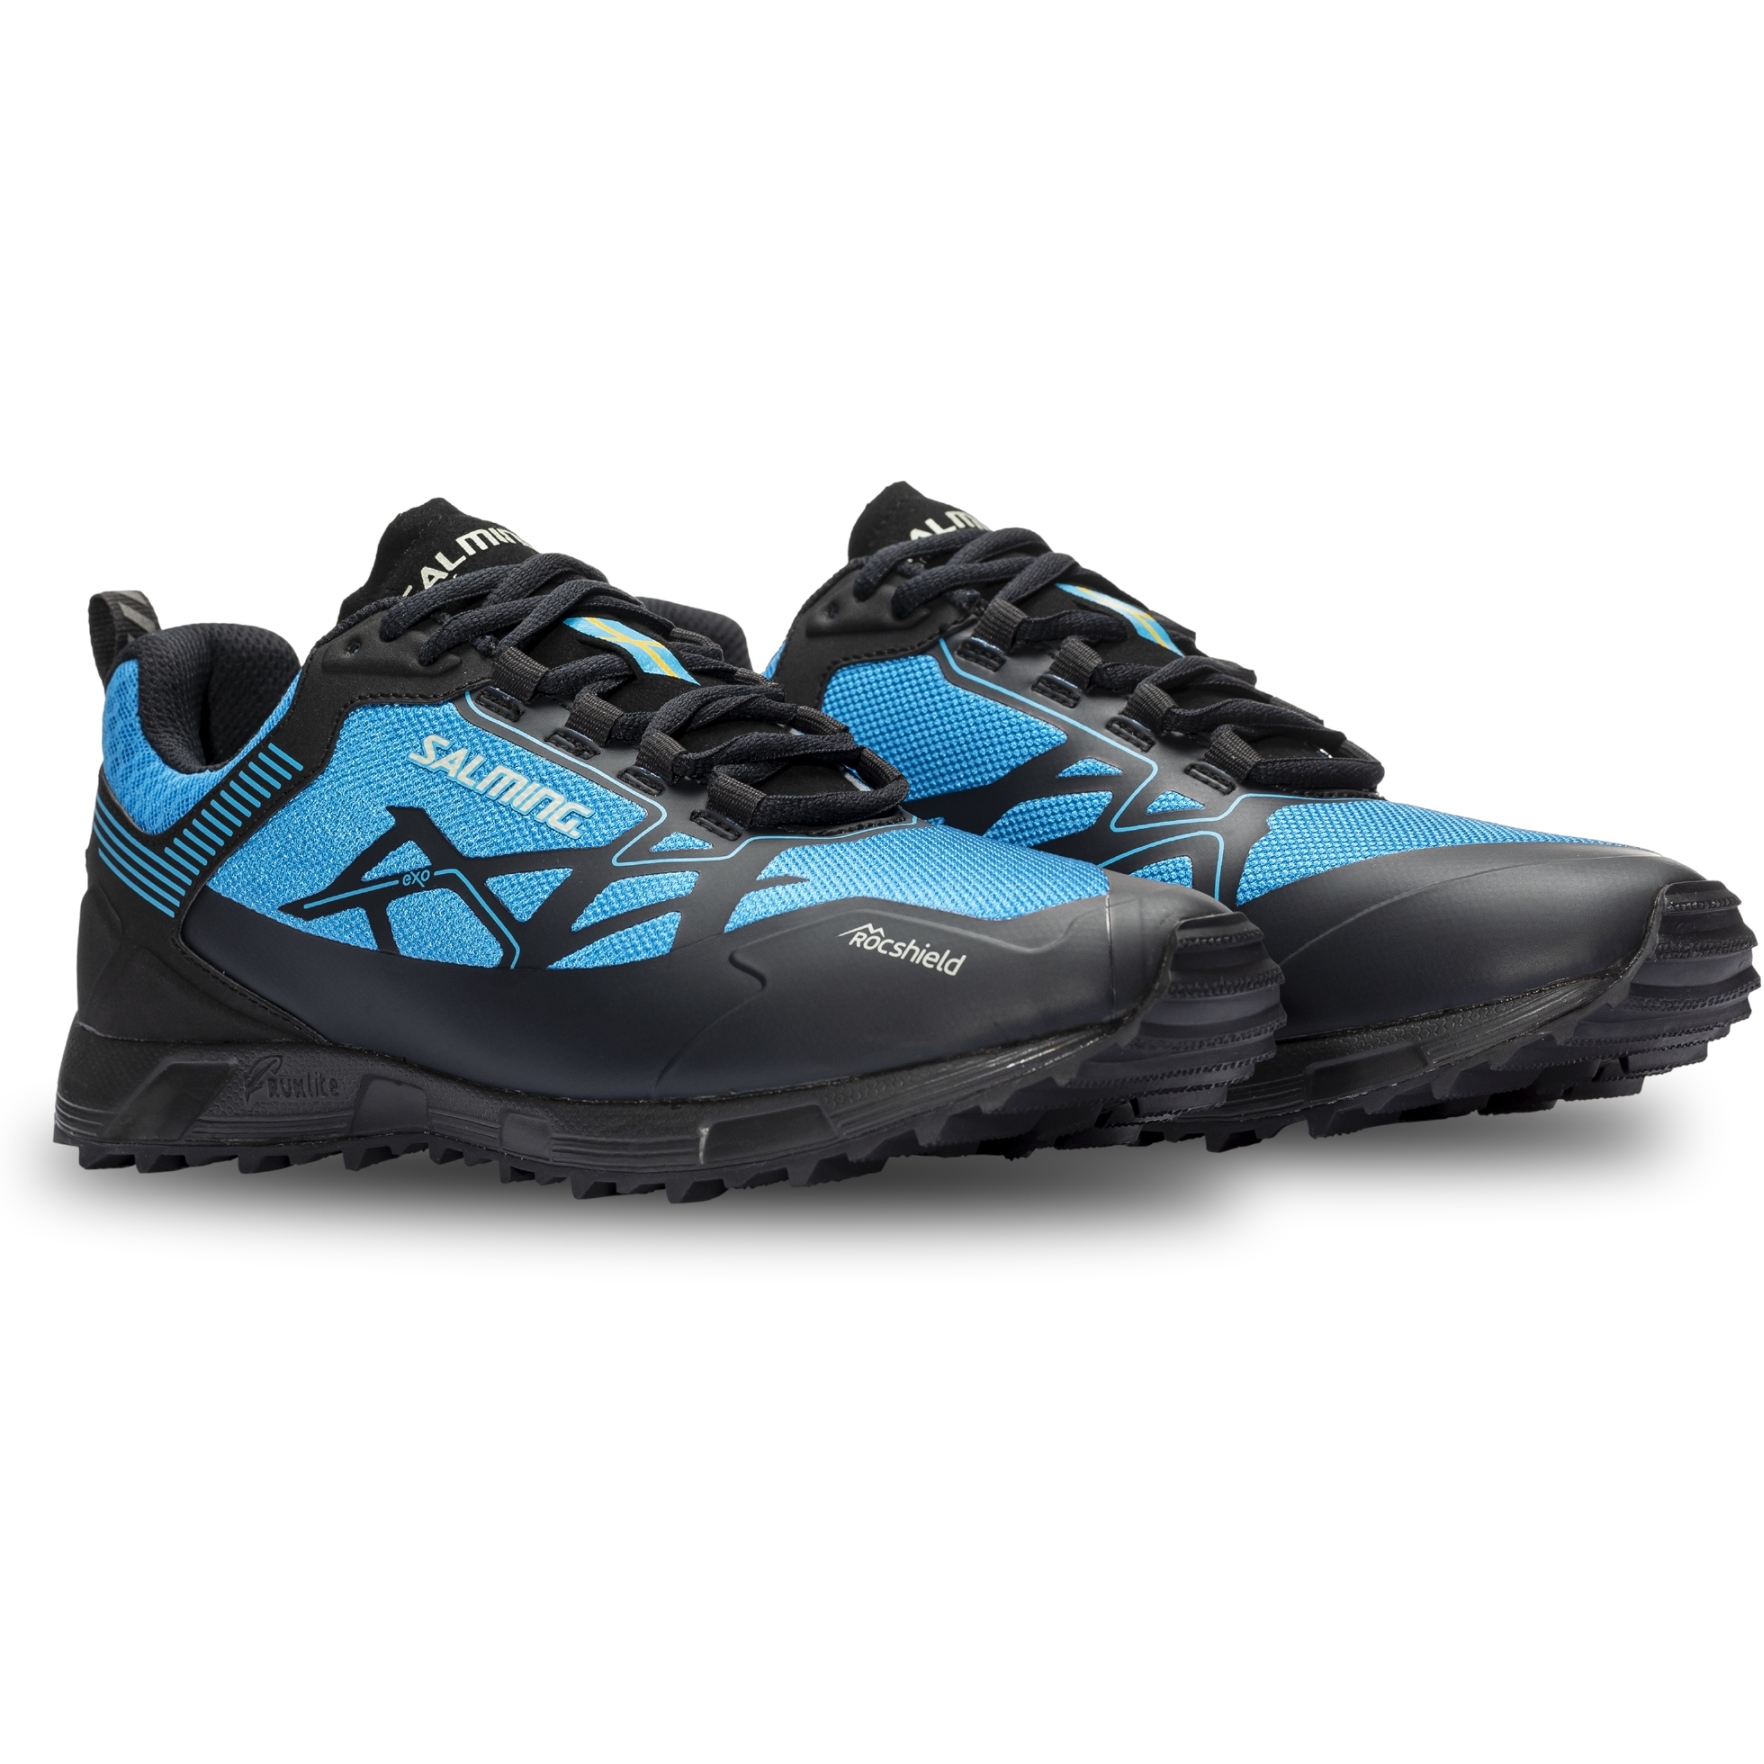 Productfoto van Salming Ranger Trail Running Shoes Women - dark grey/spring blue